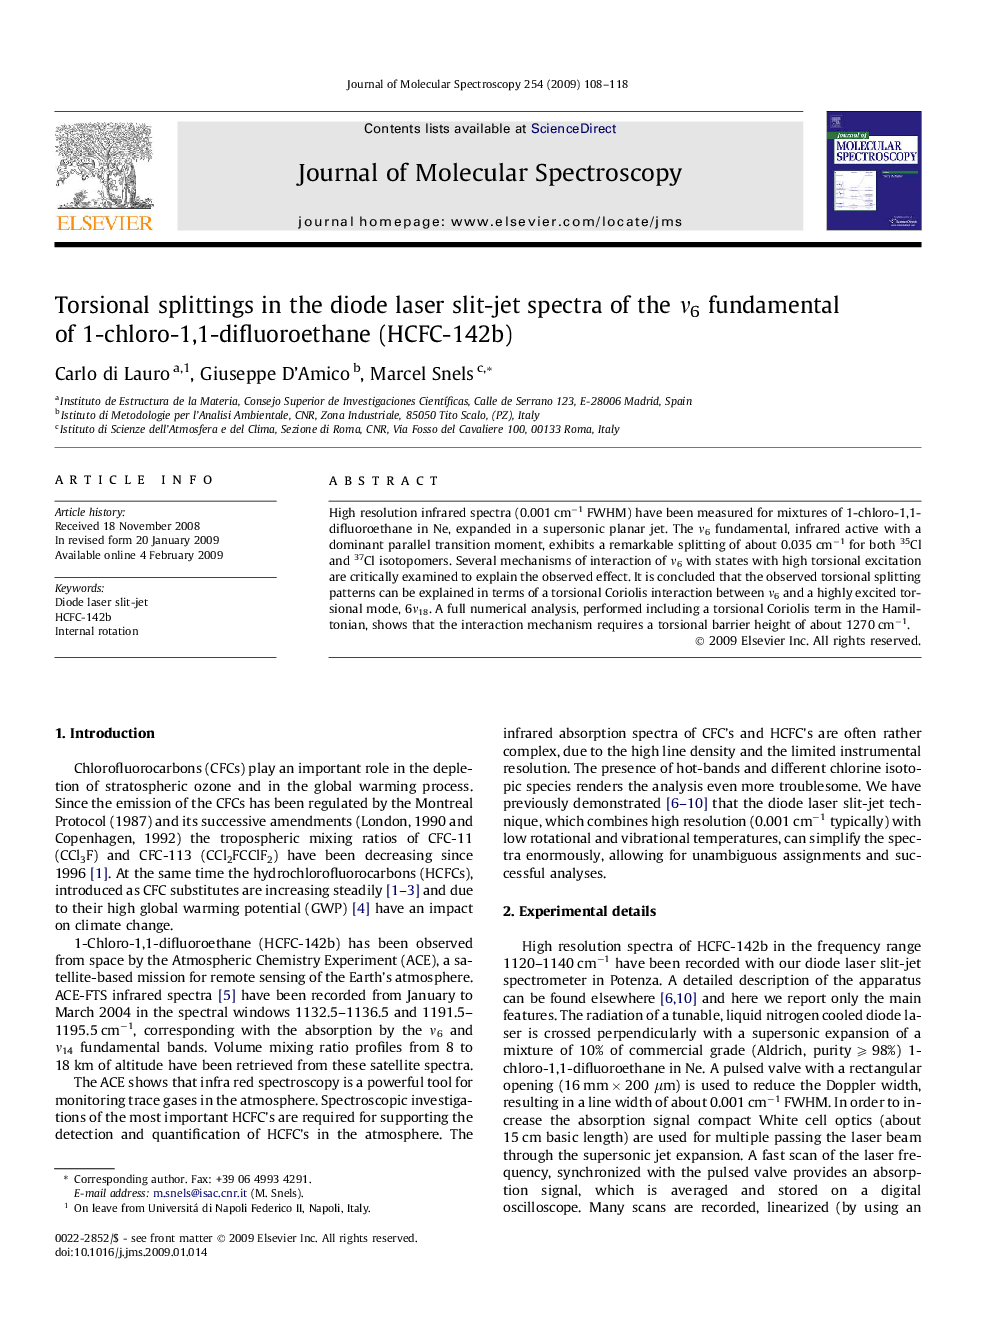 Torsional splittings in the diode laser slit-jet spectra of the Î½6 fundamental of 1-chloro-1,1-difluoroethane (HCFC-142b)